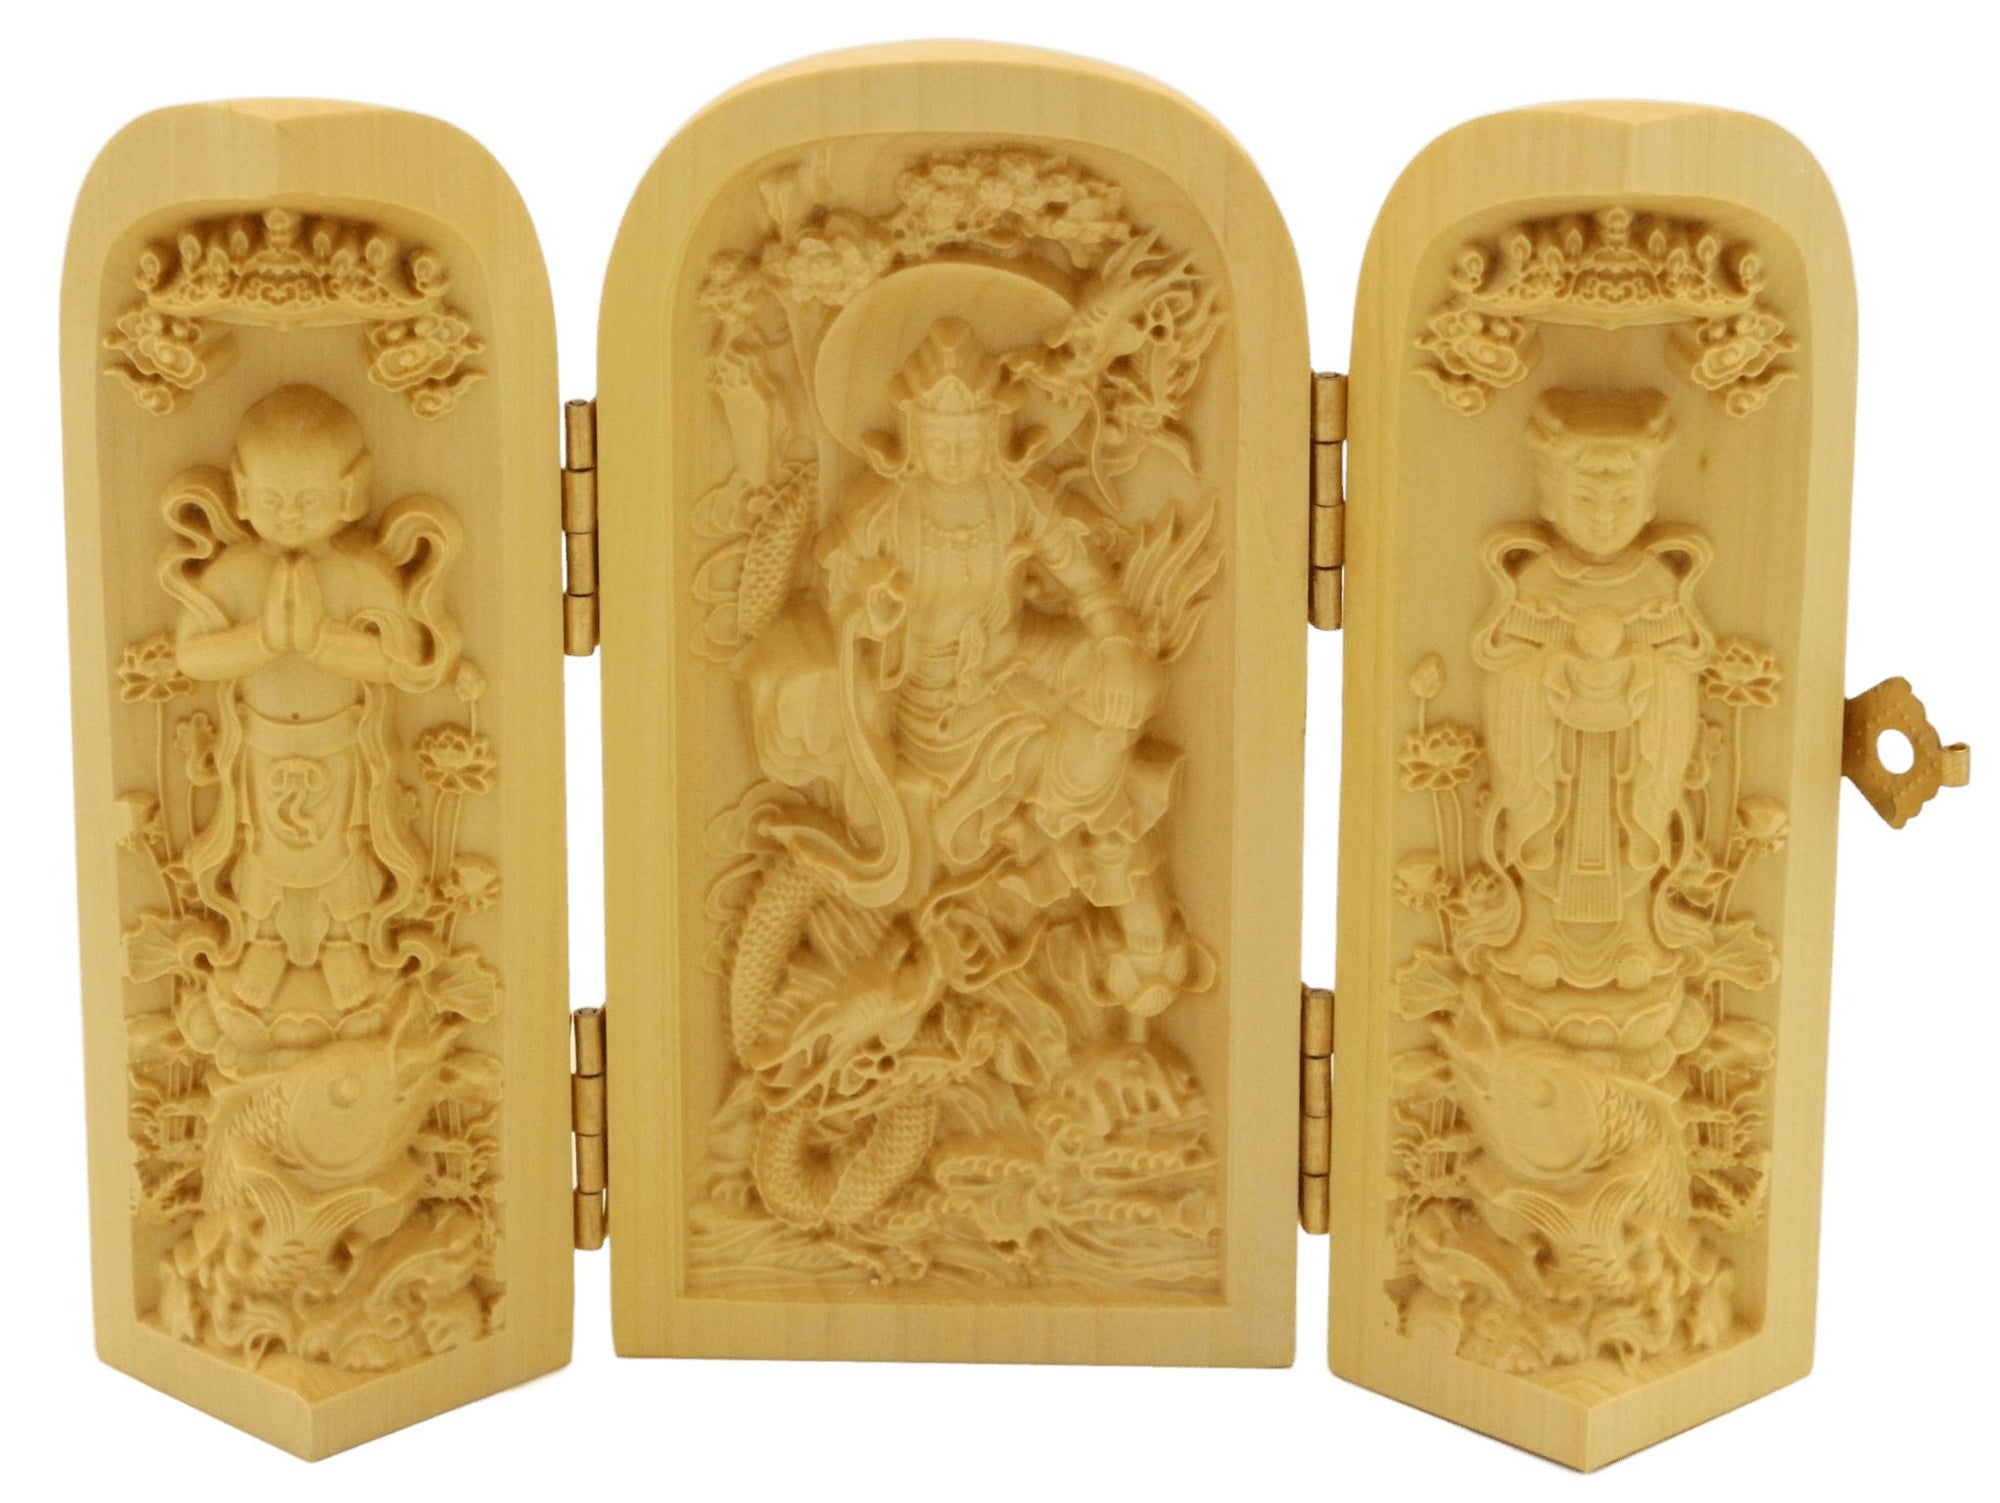 Conjunto de 3 estatuillas artesanales de madera - Bodhisattva Guanyin - Diseño 1